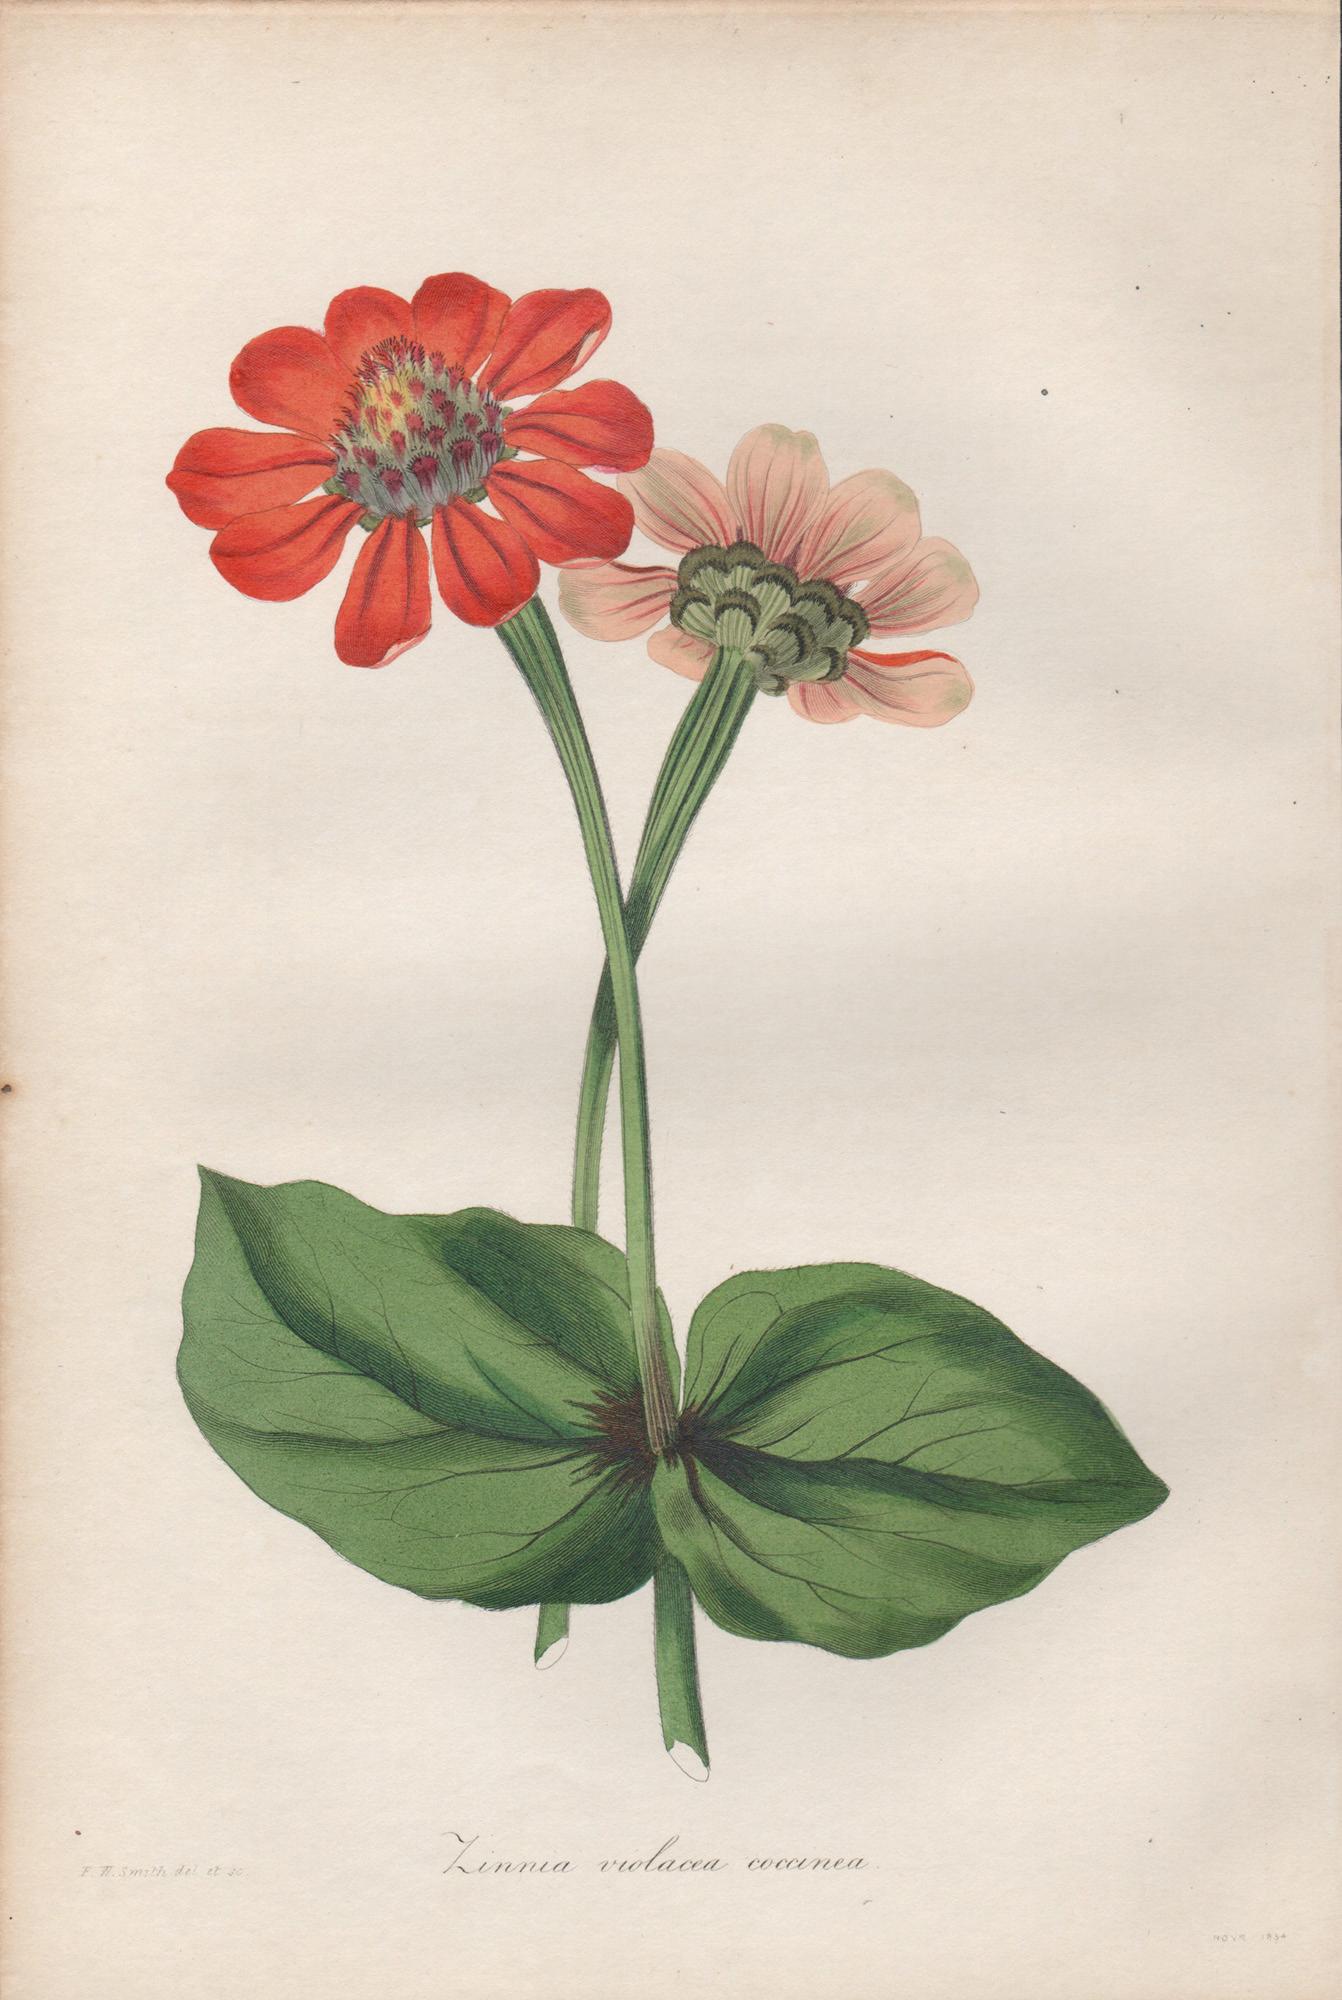 Zinnea violacea coccinea, antique botanical red flower engraving